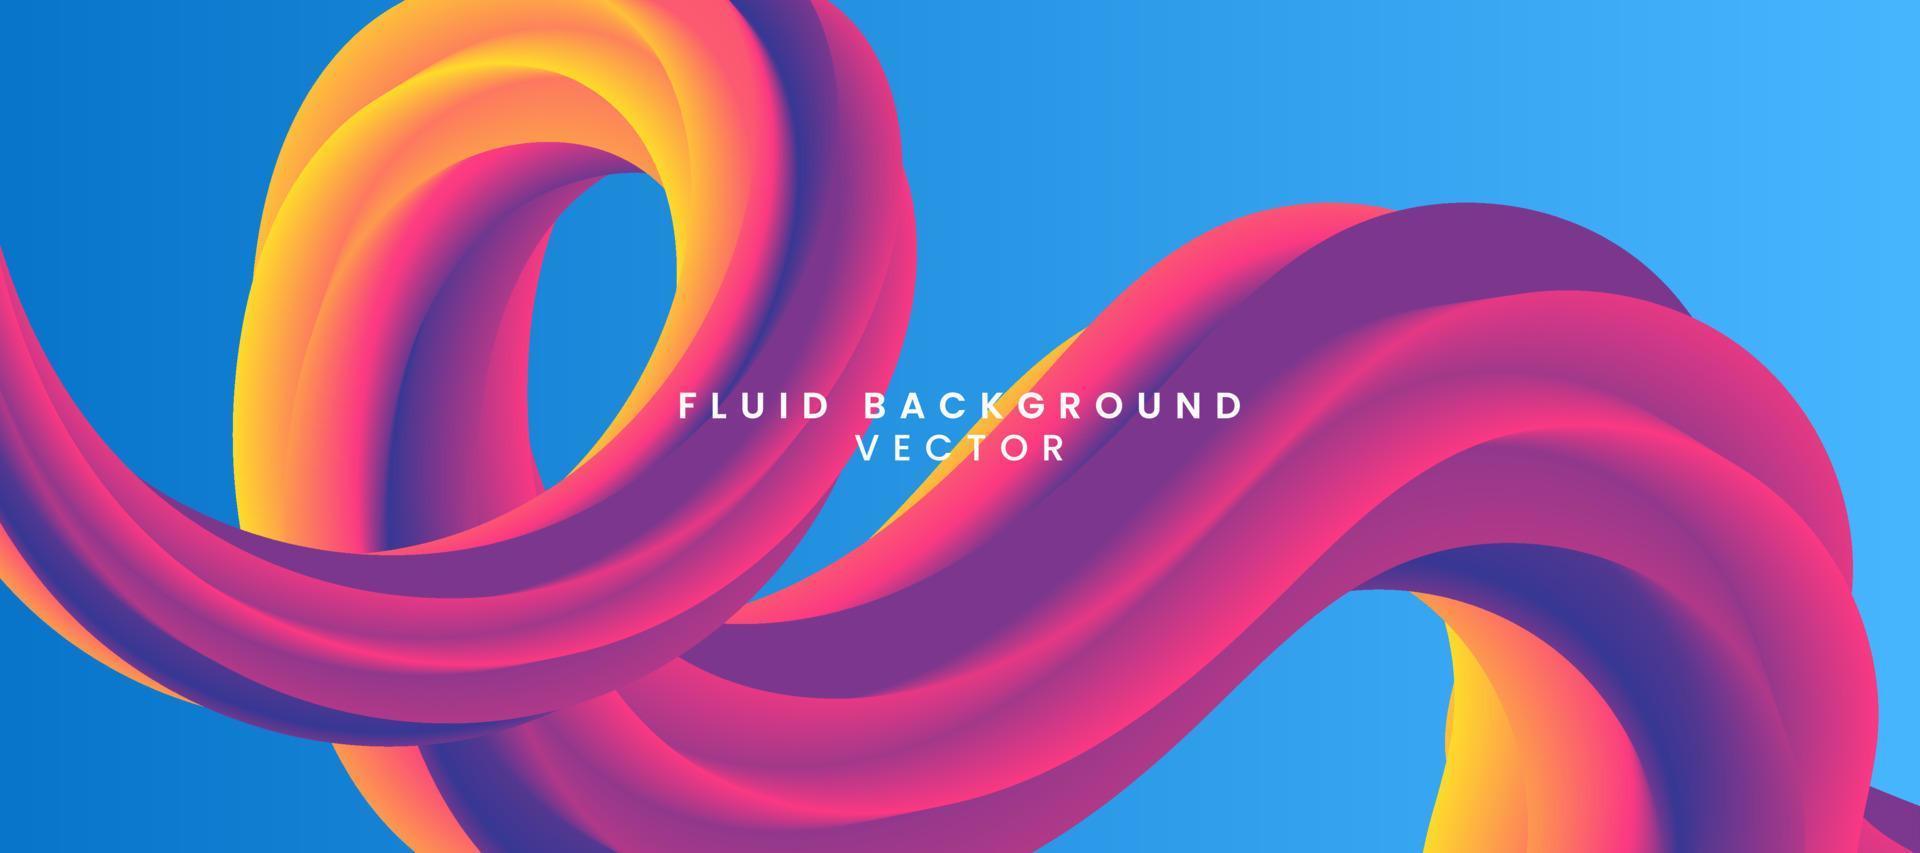 abstract fluid background vector design. fluid background vector illustation